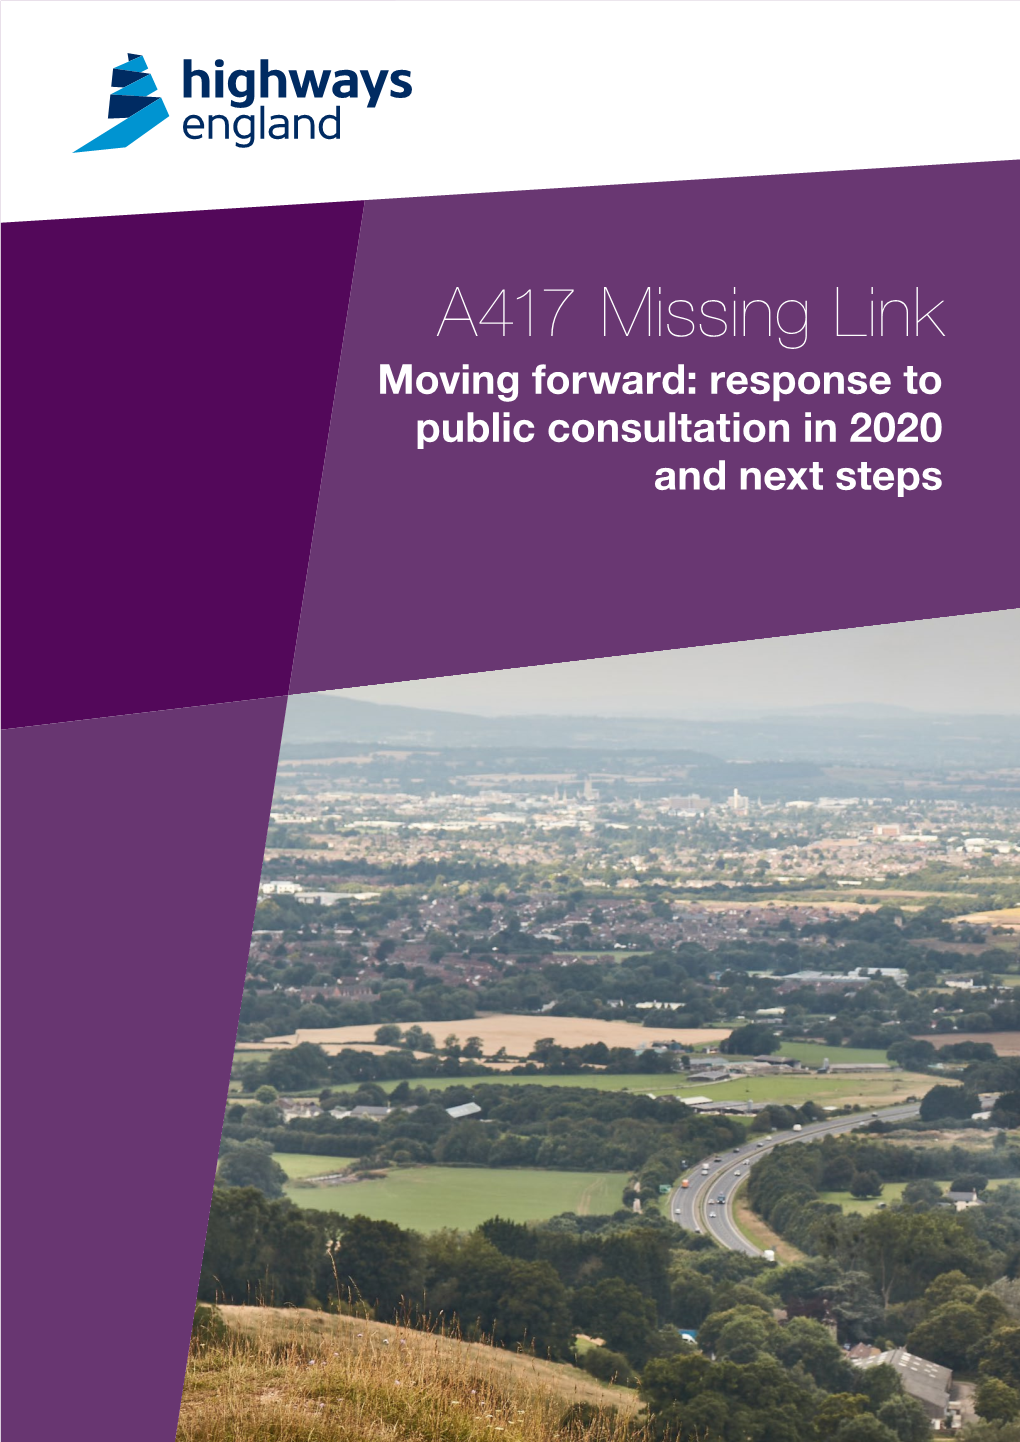 A417 Missing Link